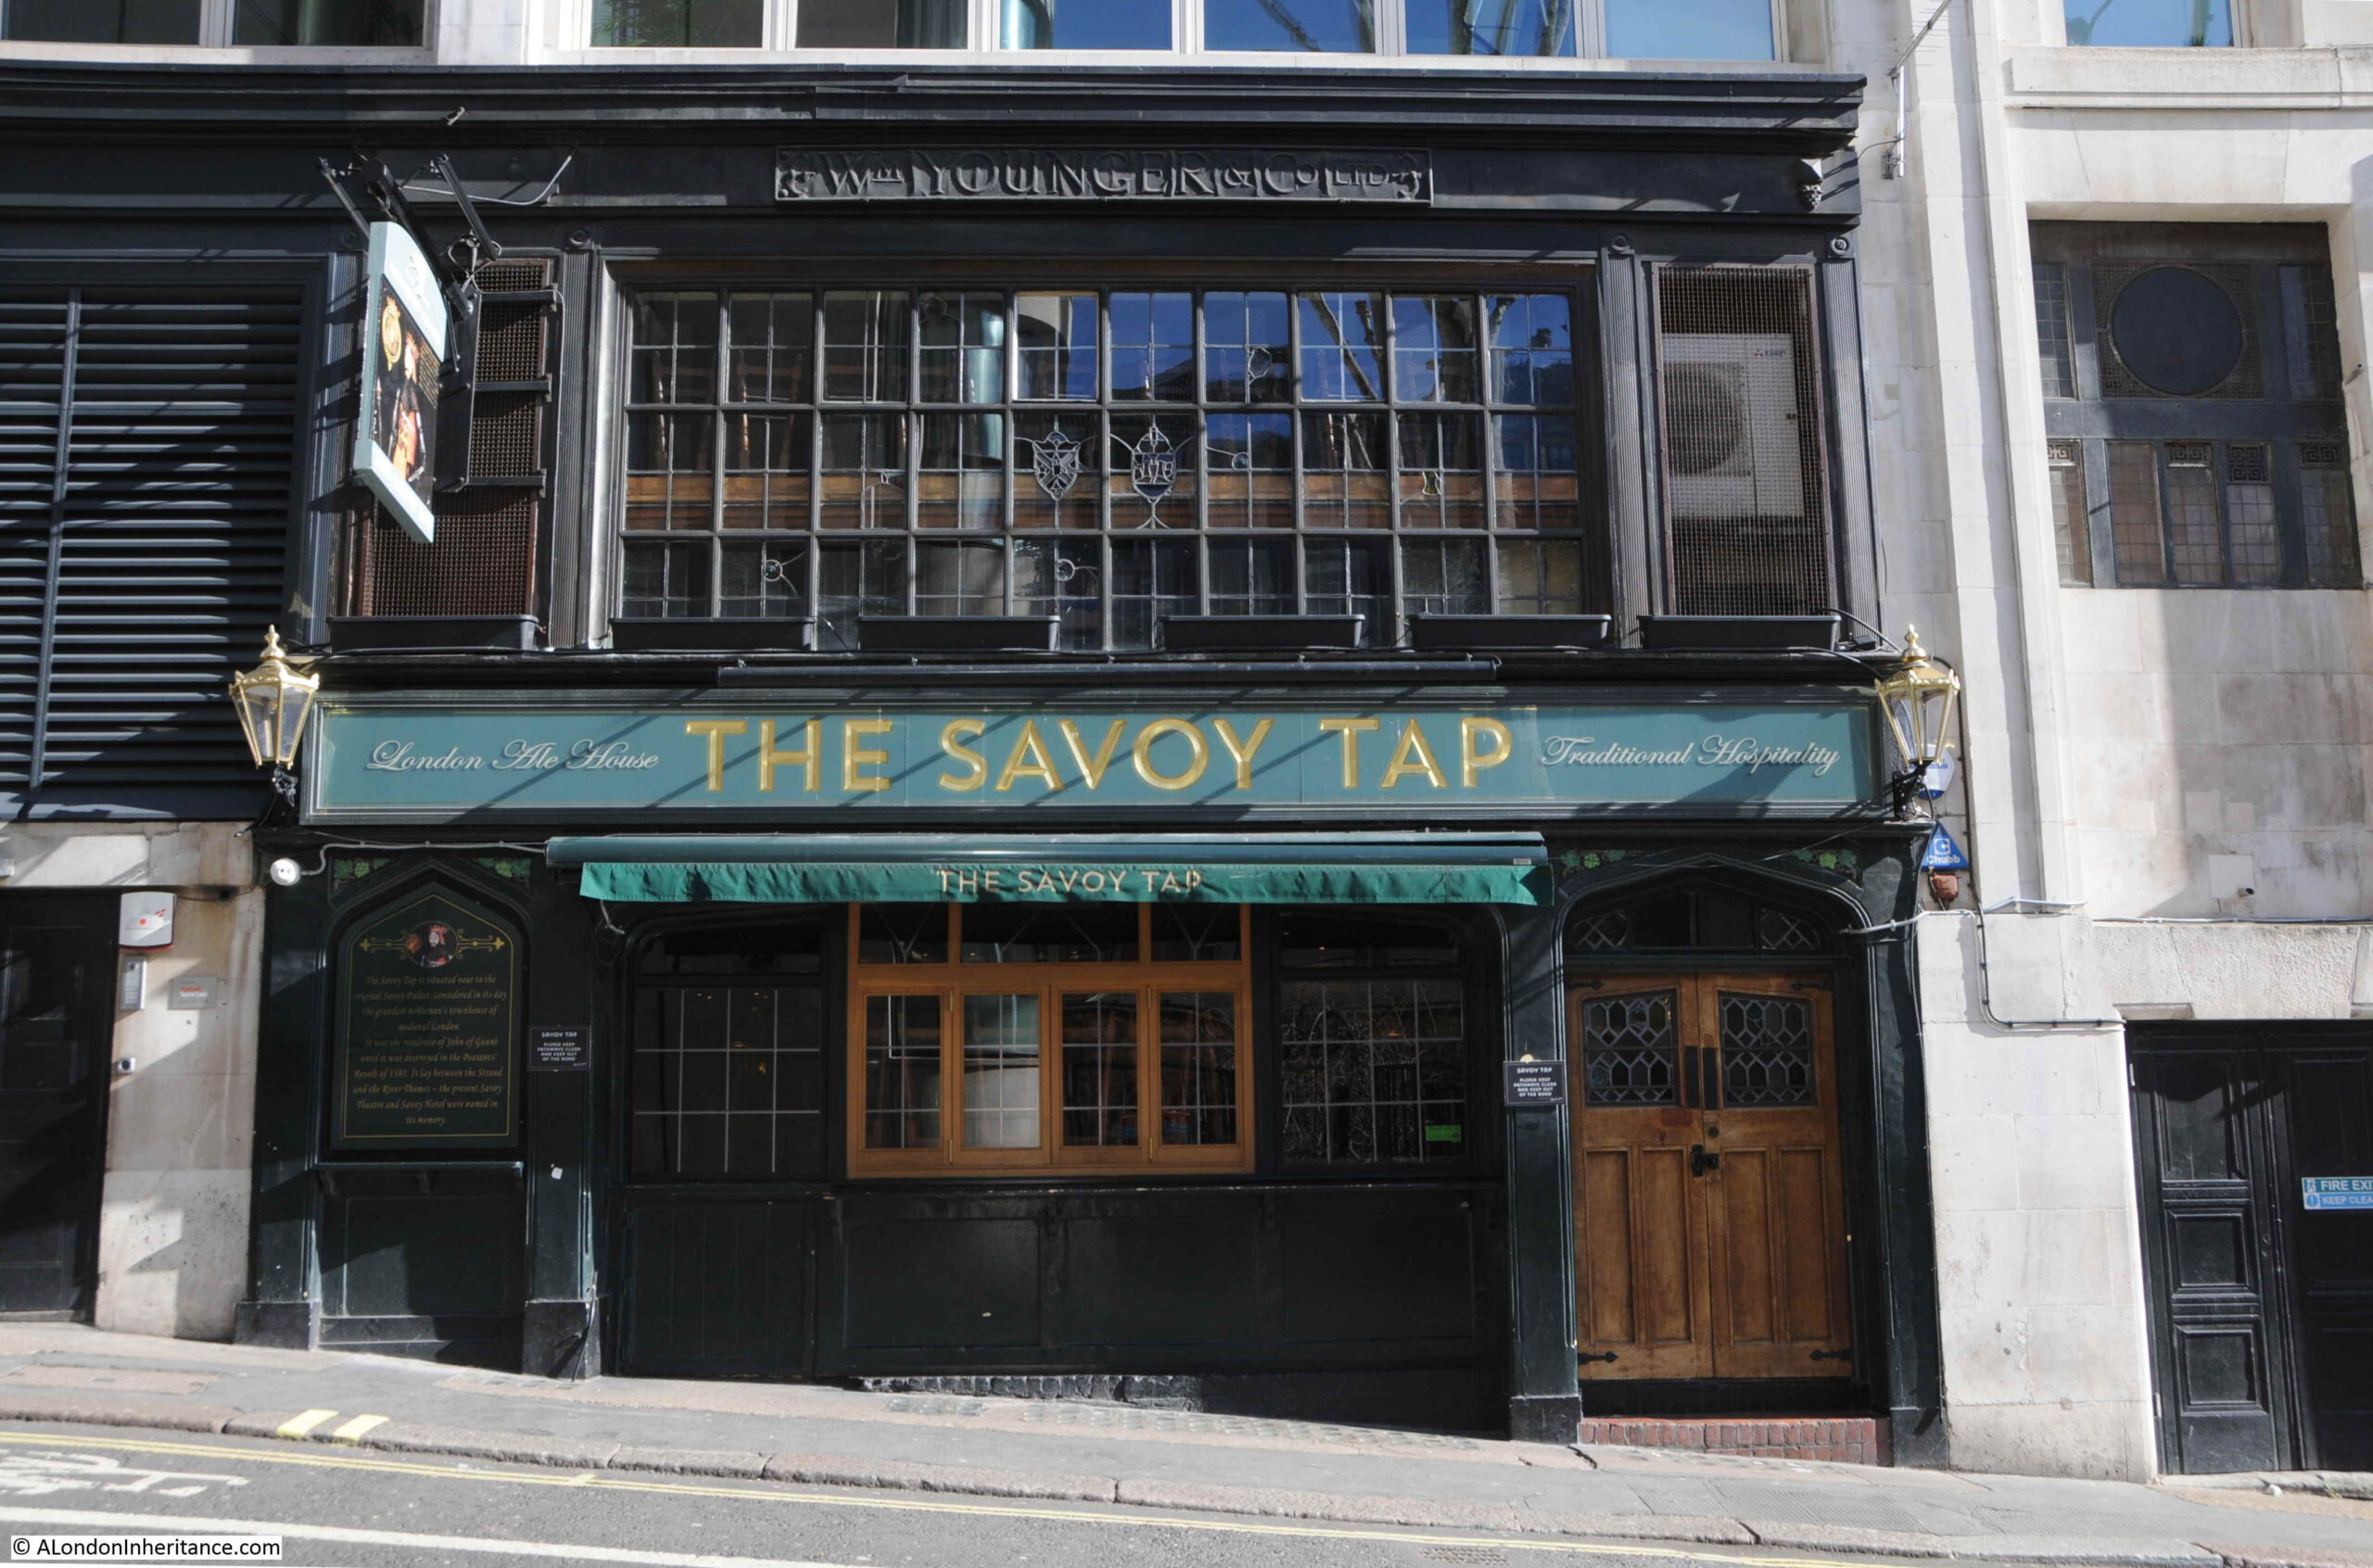 Savoy Tap pub